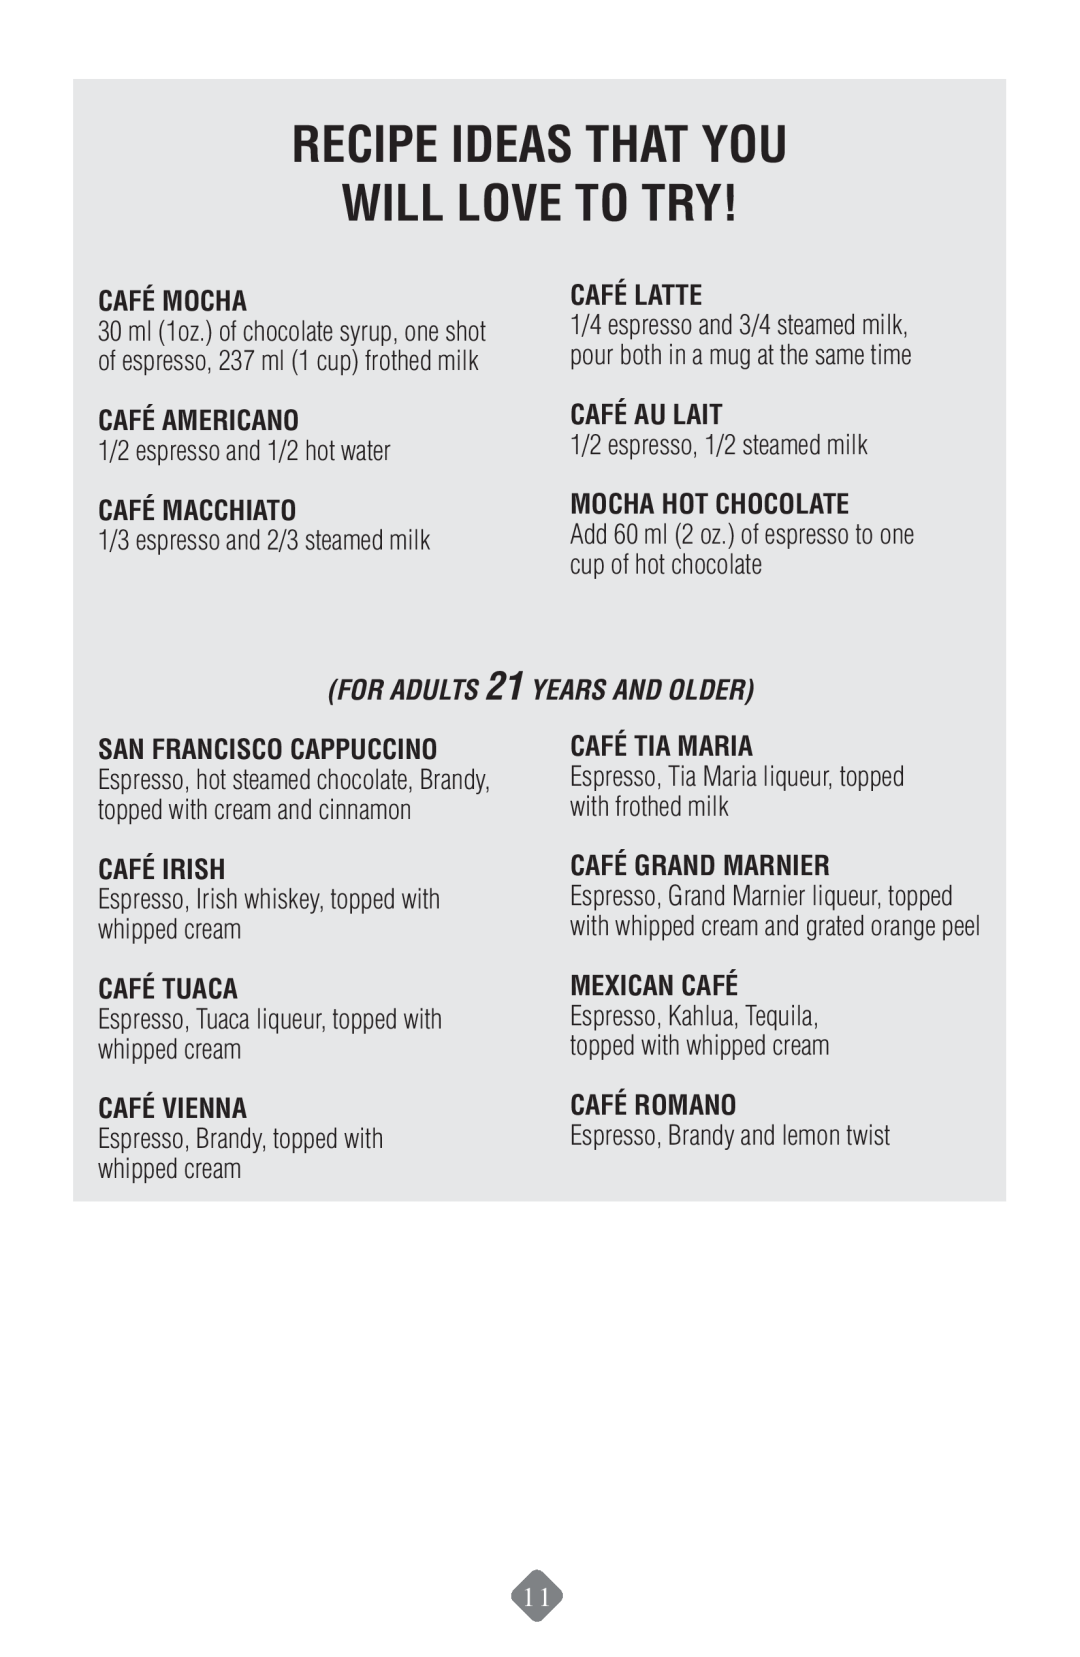 Mr. Coffee ECMP50 Recipe Ideas That You Will Love To Try, Café Mocha, Café Americano, Café Macchiato, Café Latte 